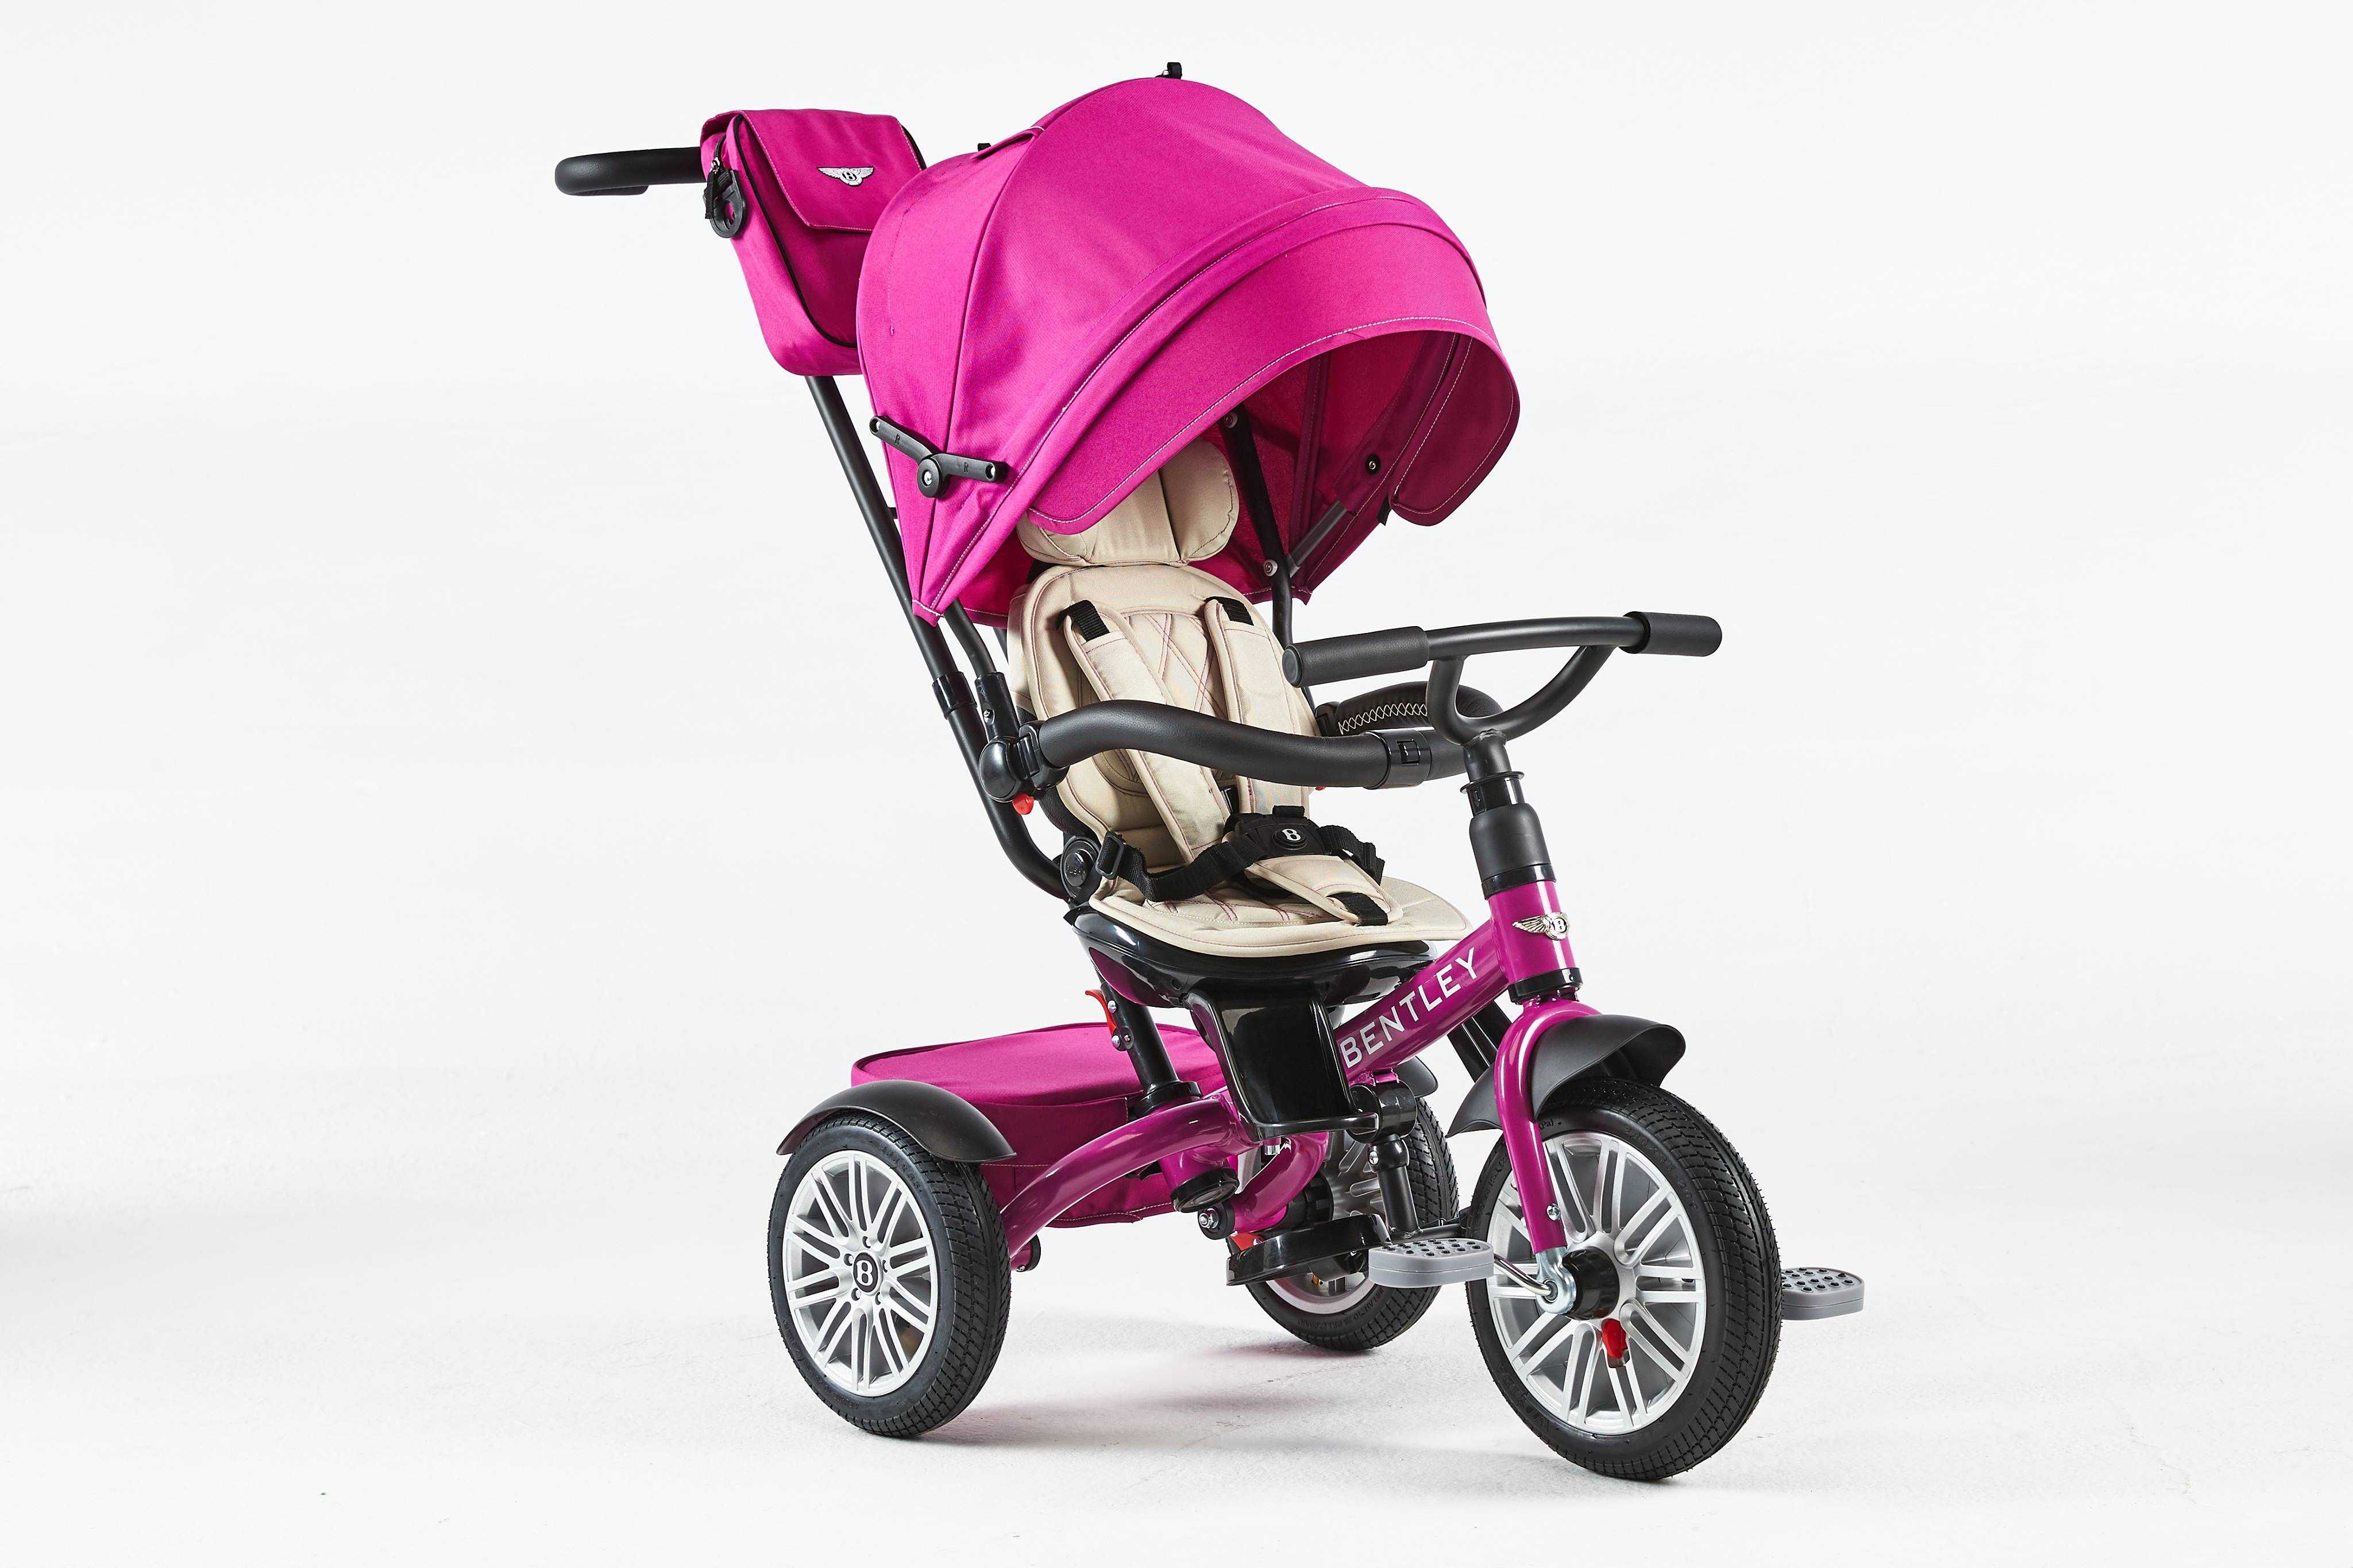 Tricicleta BENTLEY 6 in 1 Pink Fuchsia pentru copii. Carucior Bentley